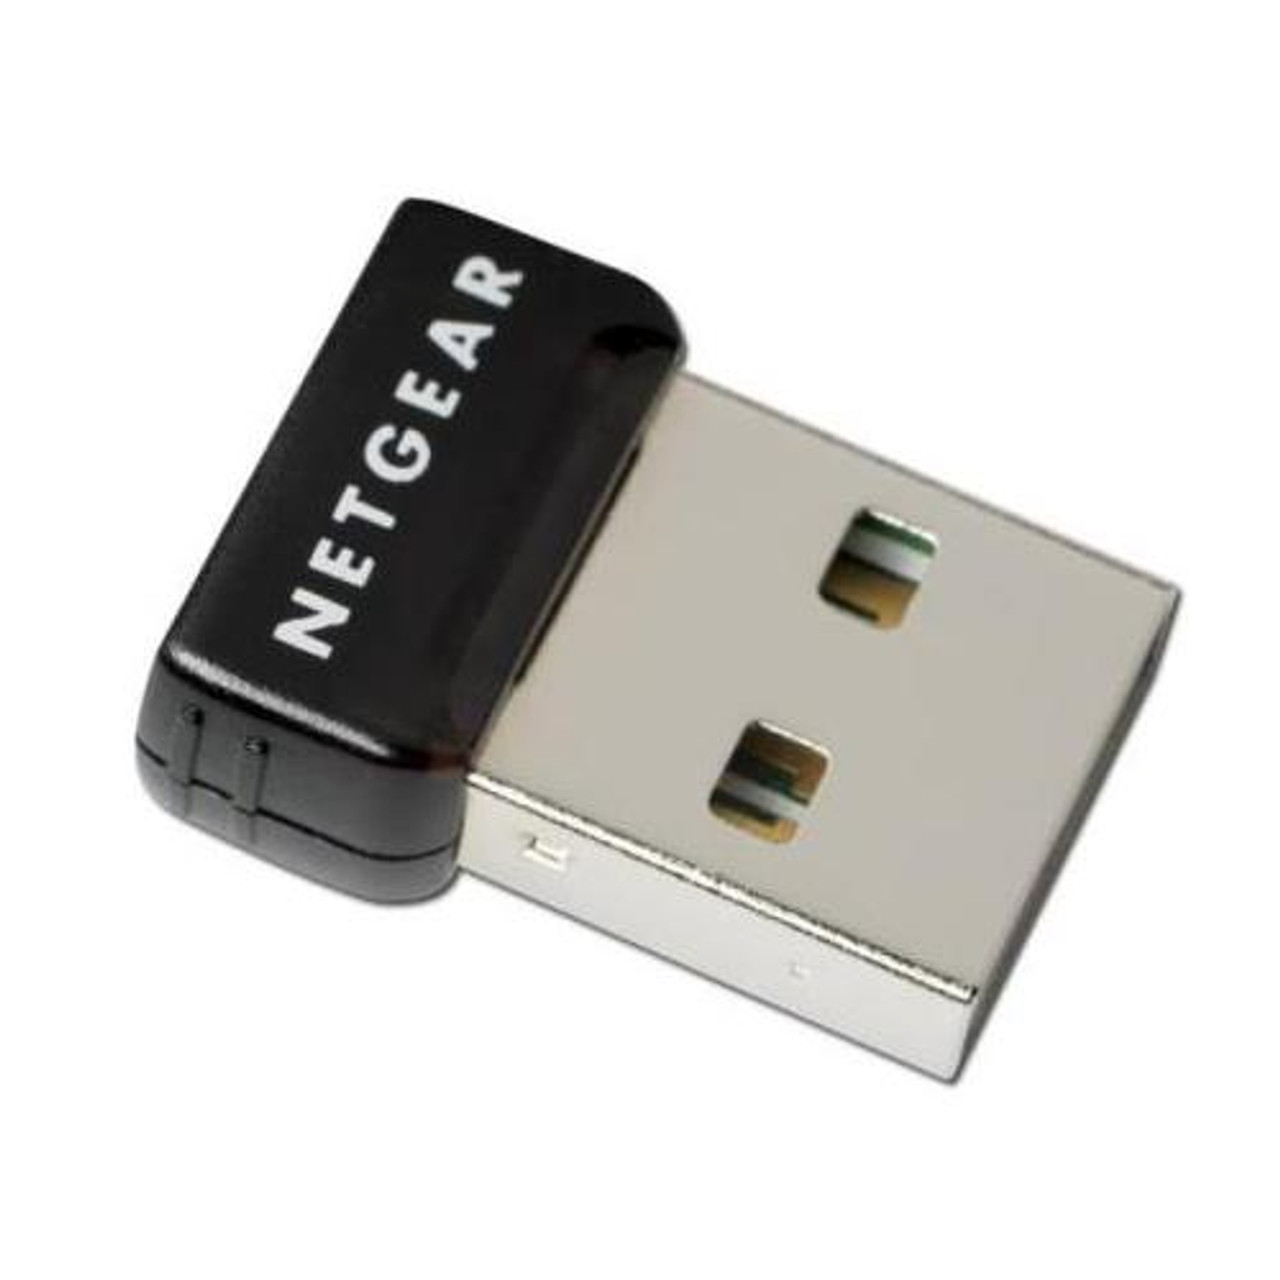 løn Email er mere end WNA1000M-100PES NetGear G54/N150 Wireless USB Micro Adapter (Refurbished)